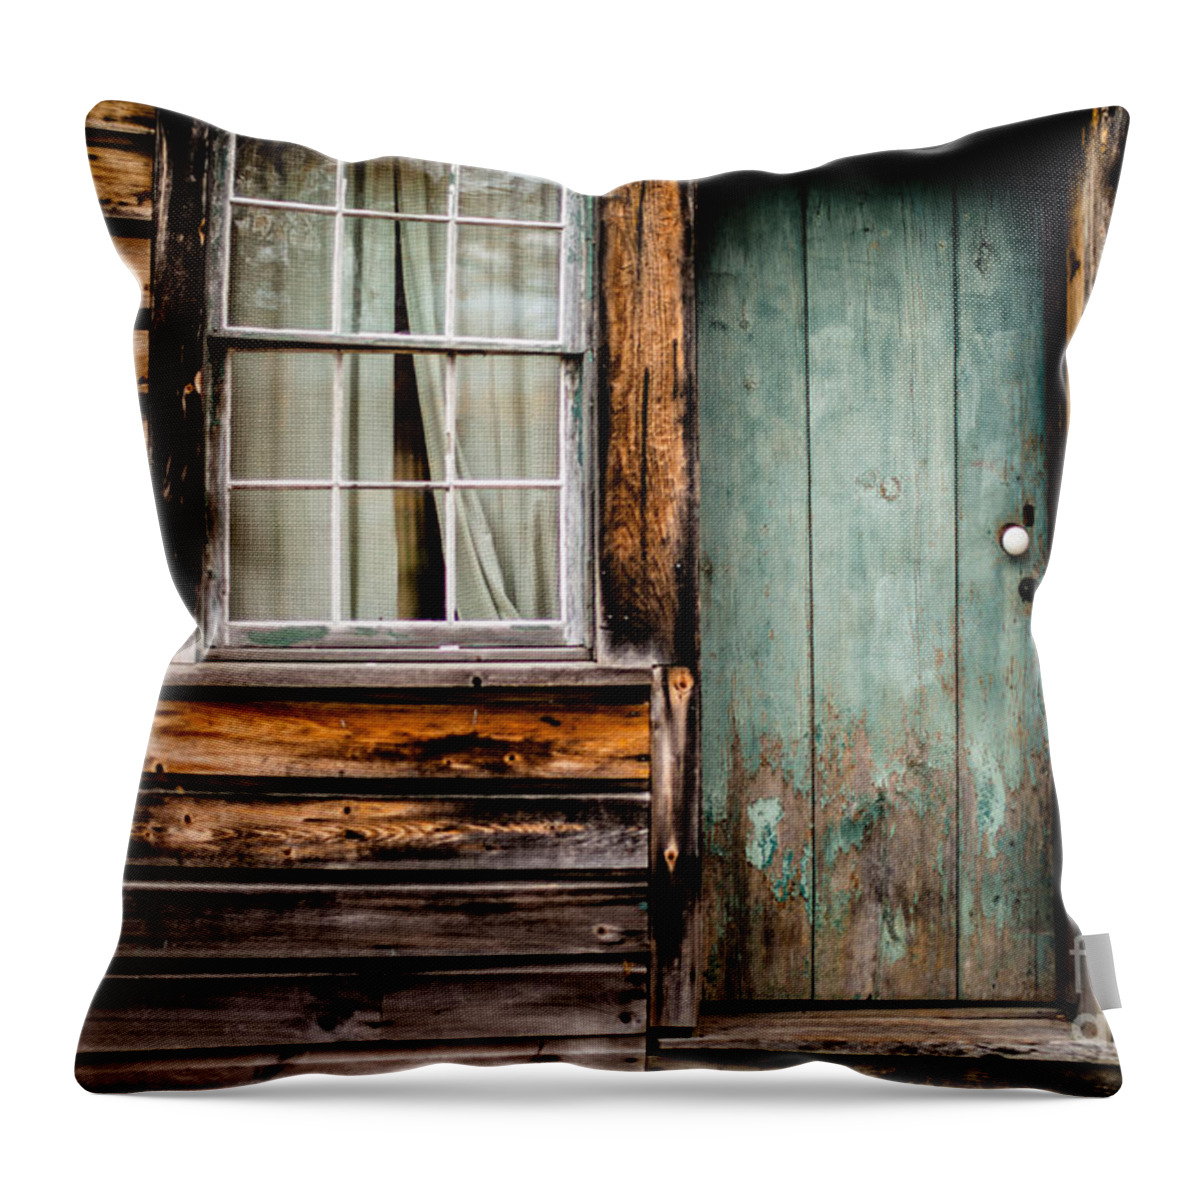 Door Throw Pillow featuring the photograph Green Door by Pamela Taylor